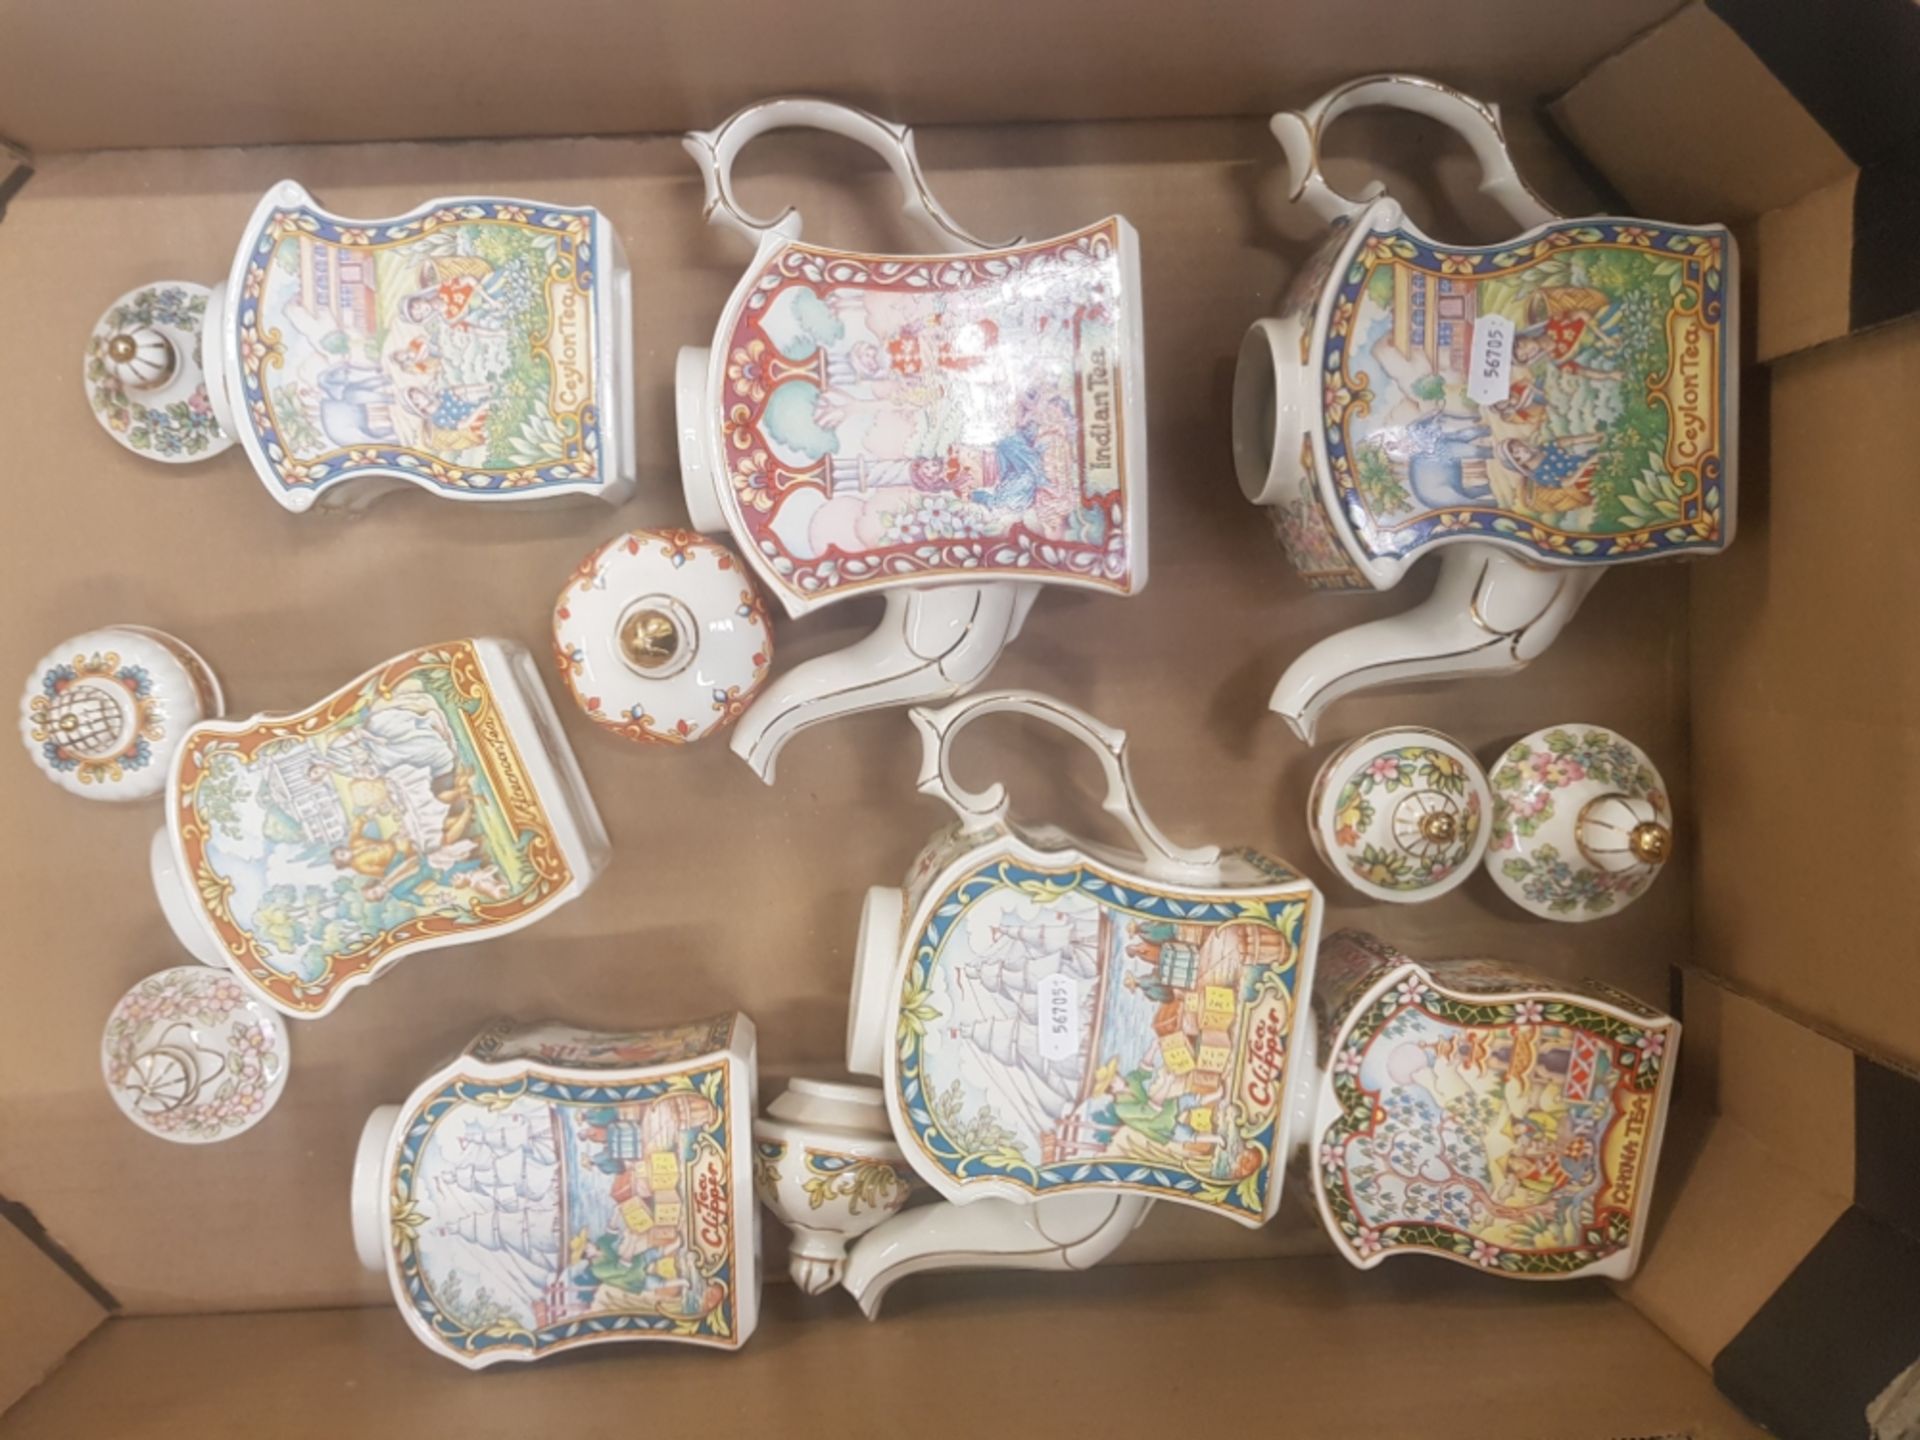 A collection of Sadler tea pots and tea caddies (1 tray)